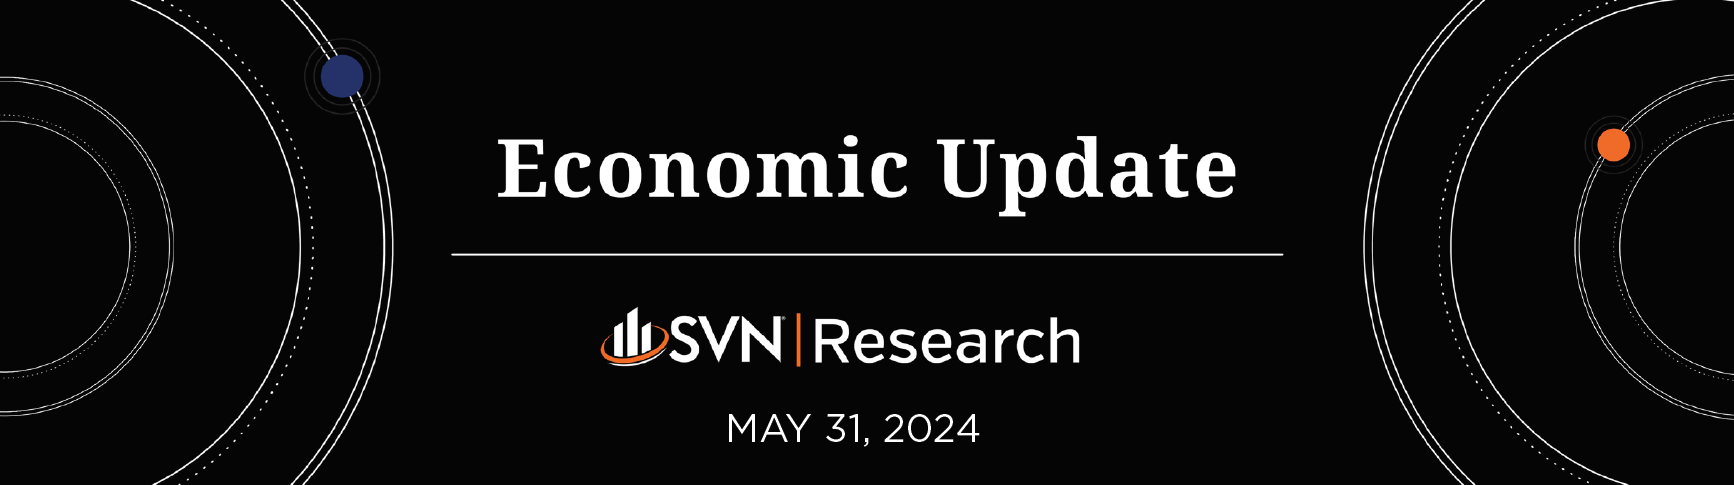 SVN | Research Economic Update 5.31.2024